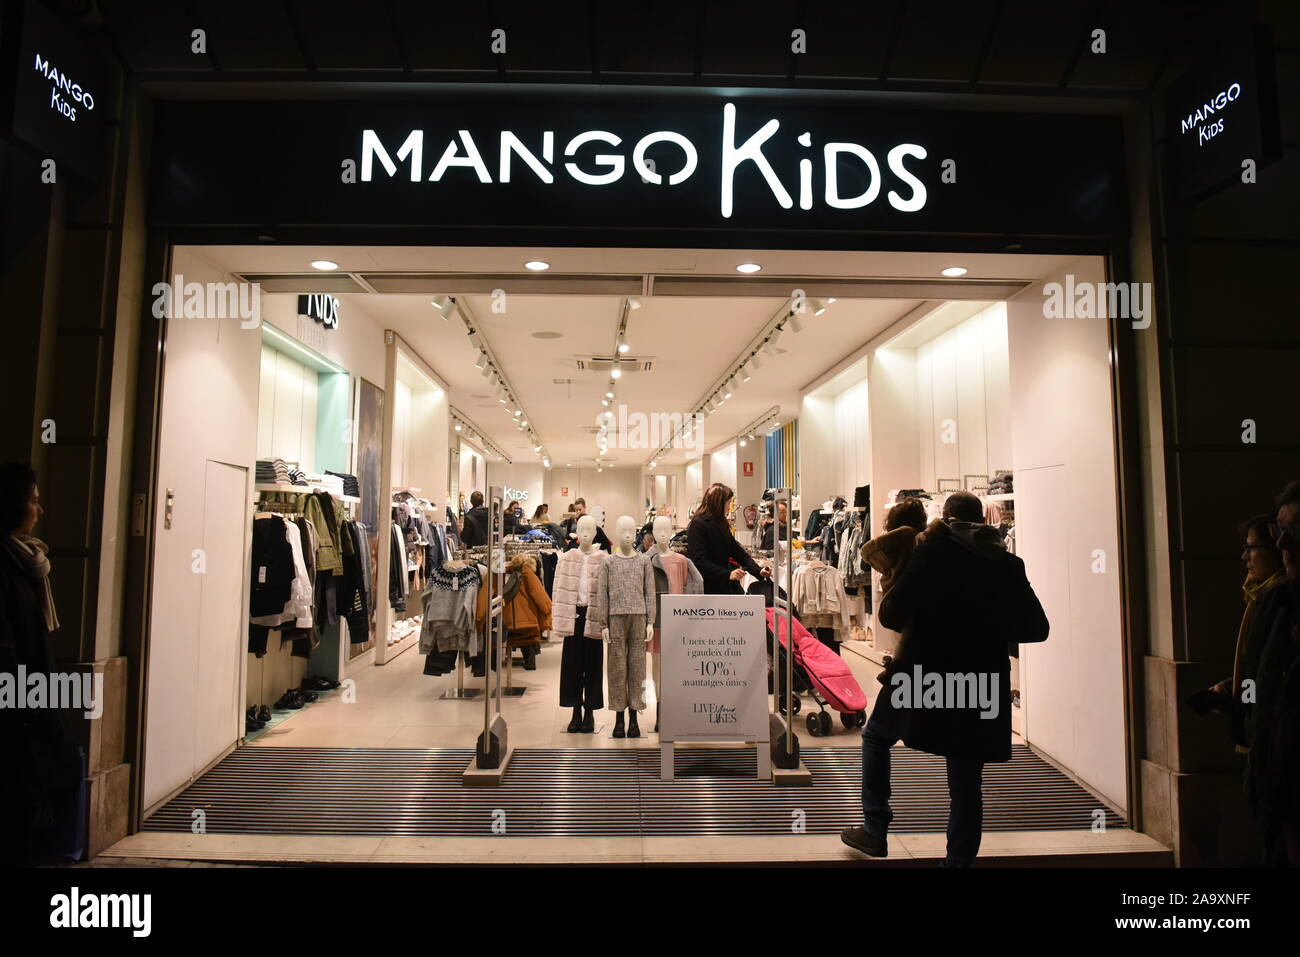 Mango Kids store seen in Barcelona Stock Photo - Alamy